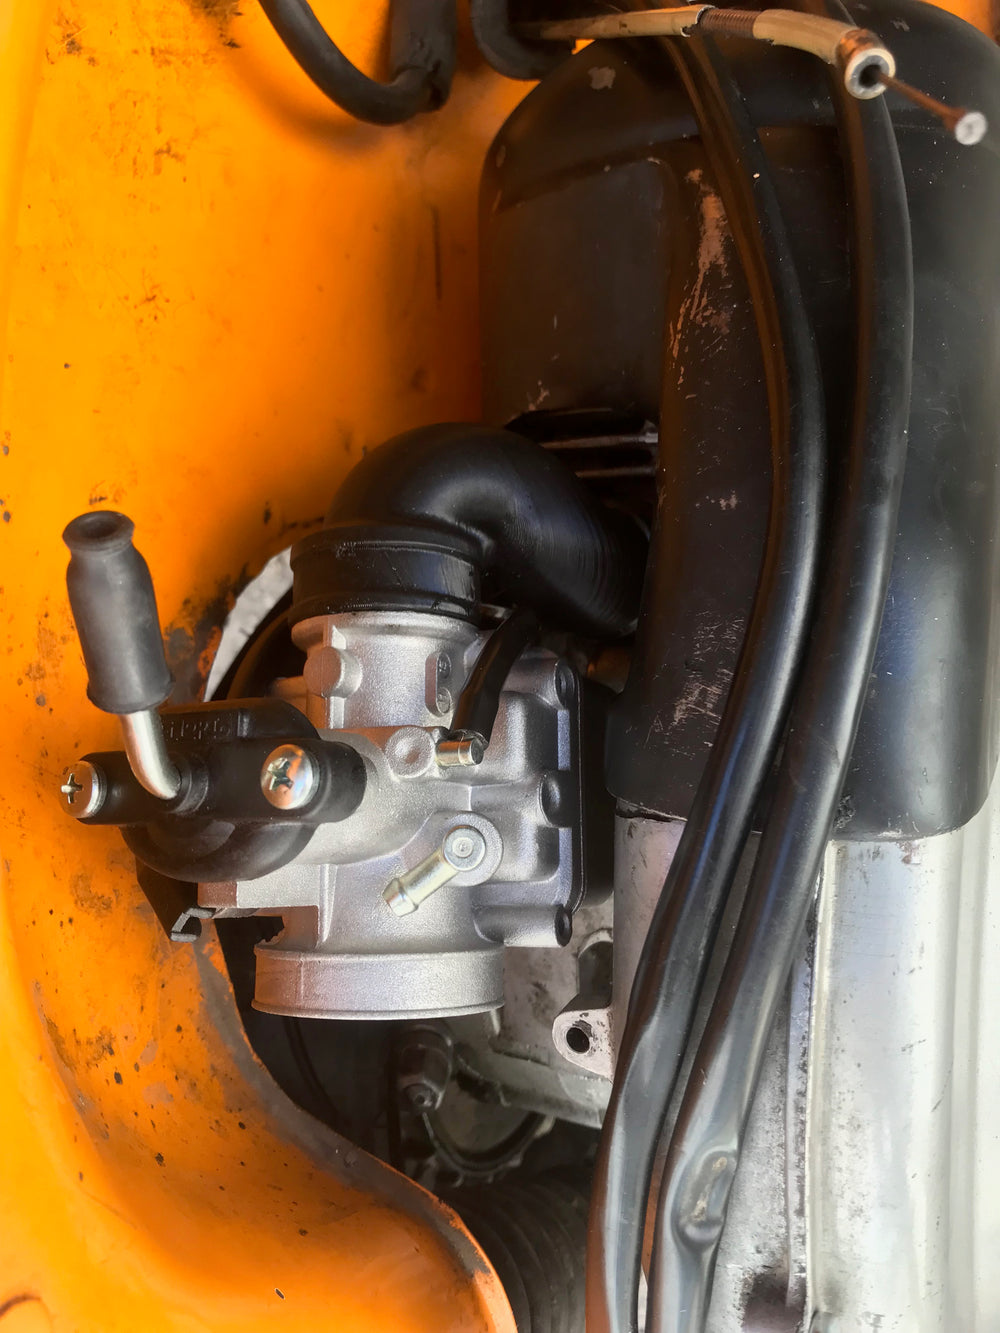 Intake manifold for VHST24 on Motovespa 160GT